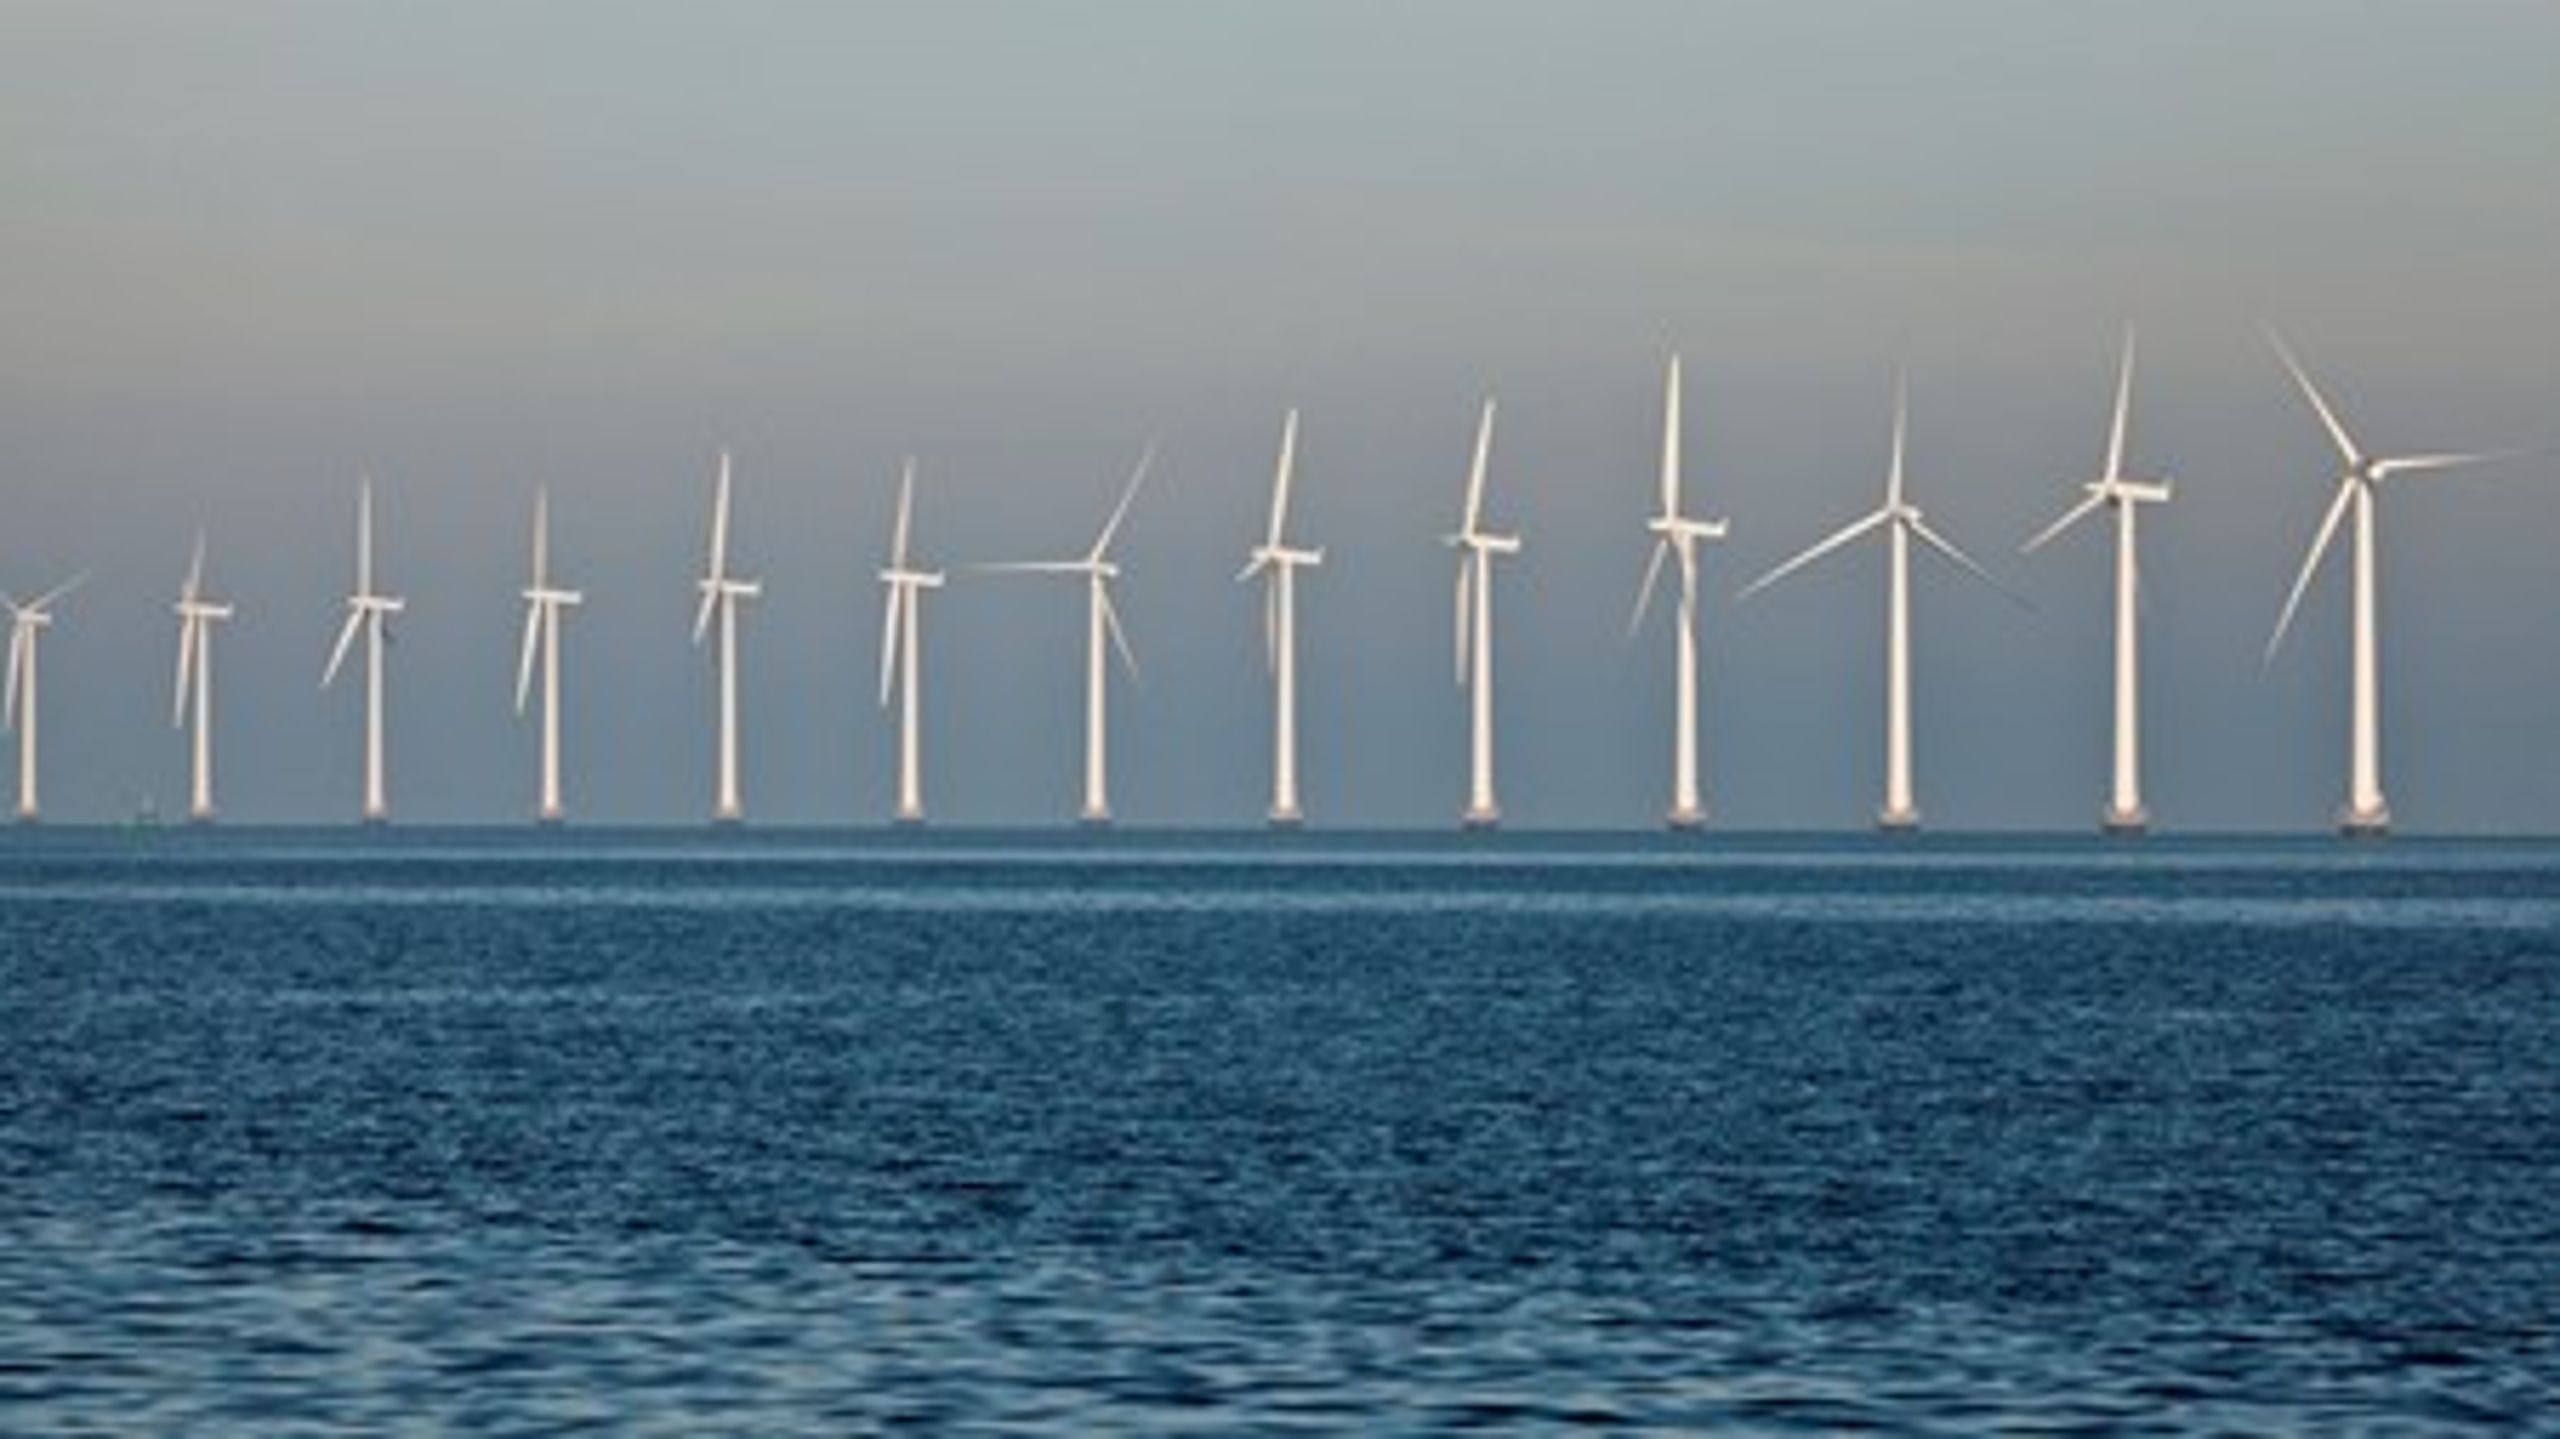 "Vi tror på, at en regional tilgang
omkring især Nordsøen vil være til gavn for alle parter," skriver direktører fra Dansk Energi, DI Energi, Vindmølleindustrien, Dansk Havne og Danmarks Rederiforening.